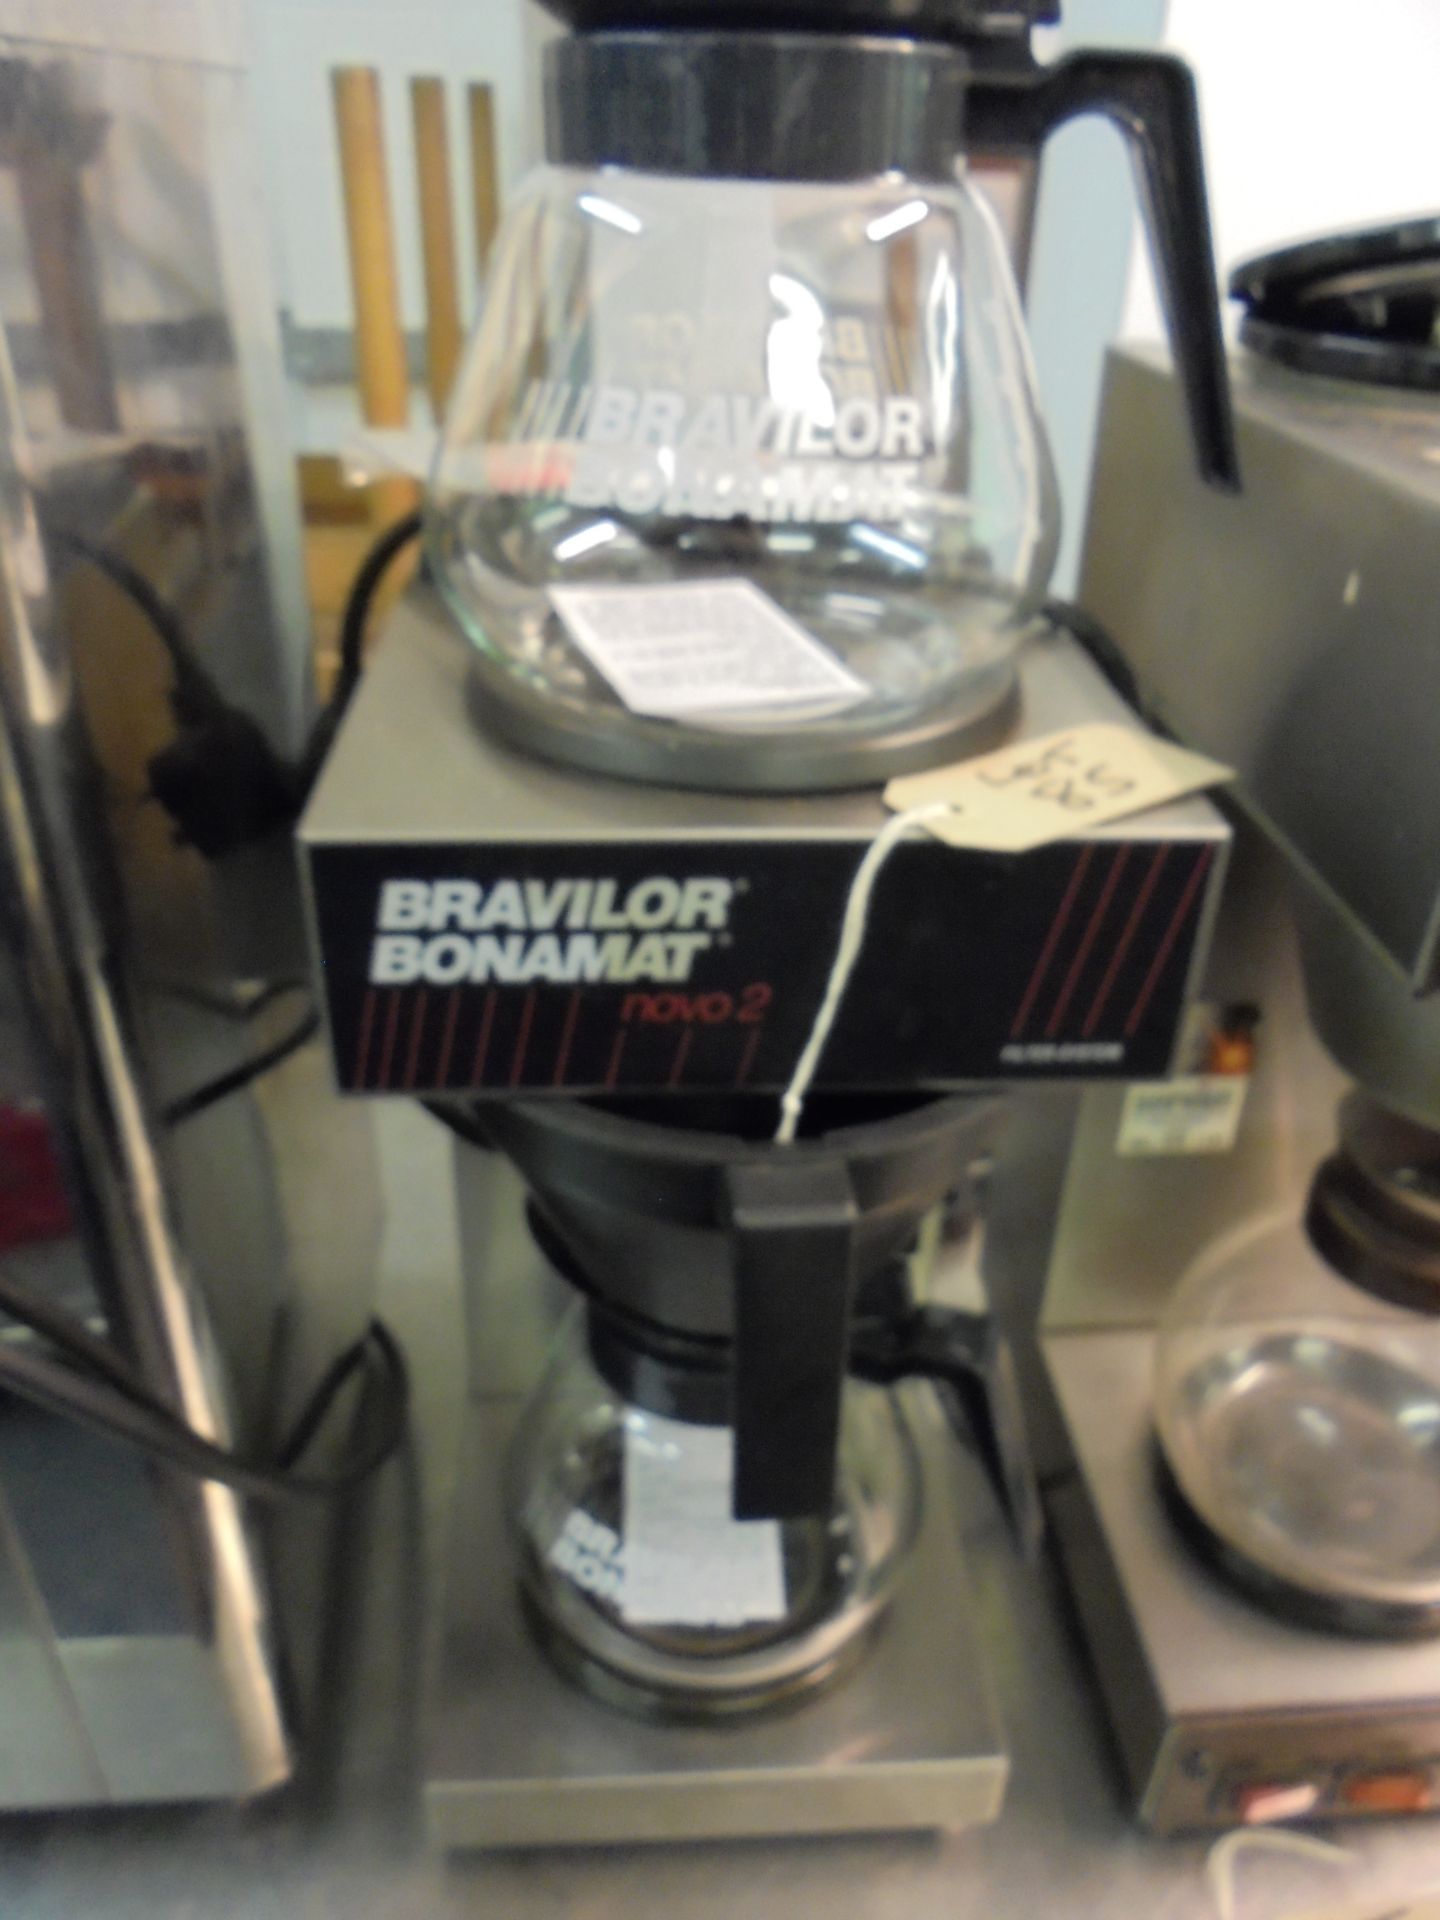 Bravilor Bonamat Novo 2 Filter Coffee Machine. Comes with 2 New Jugs.